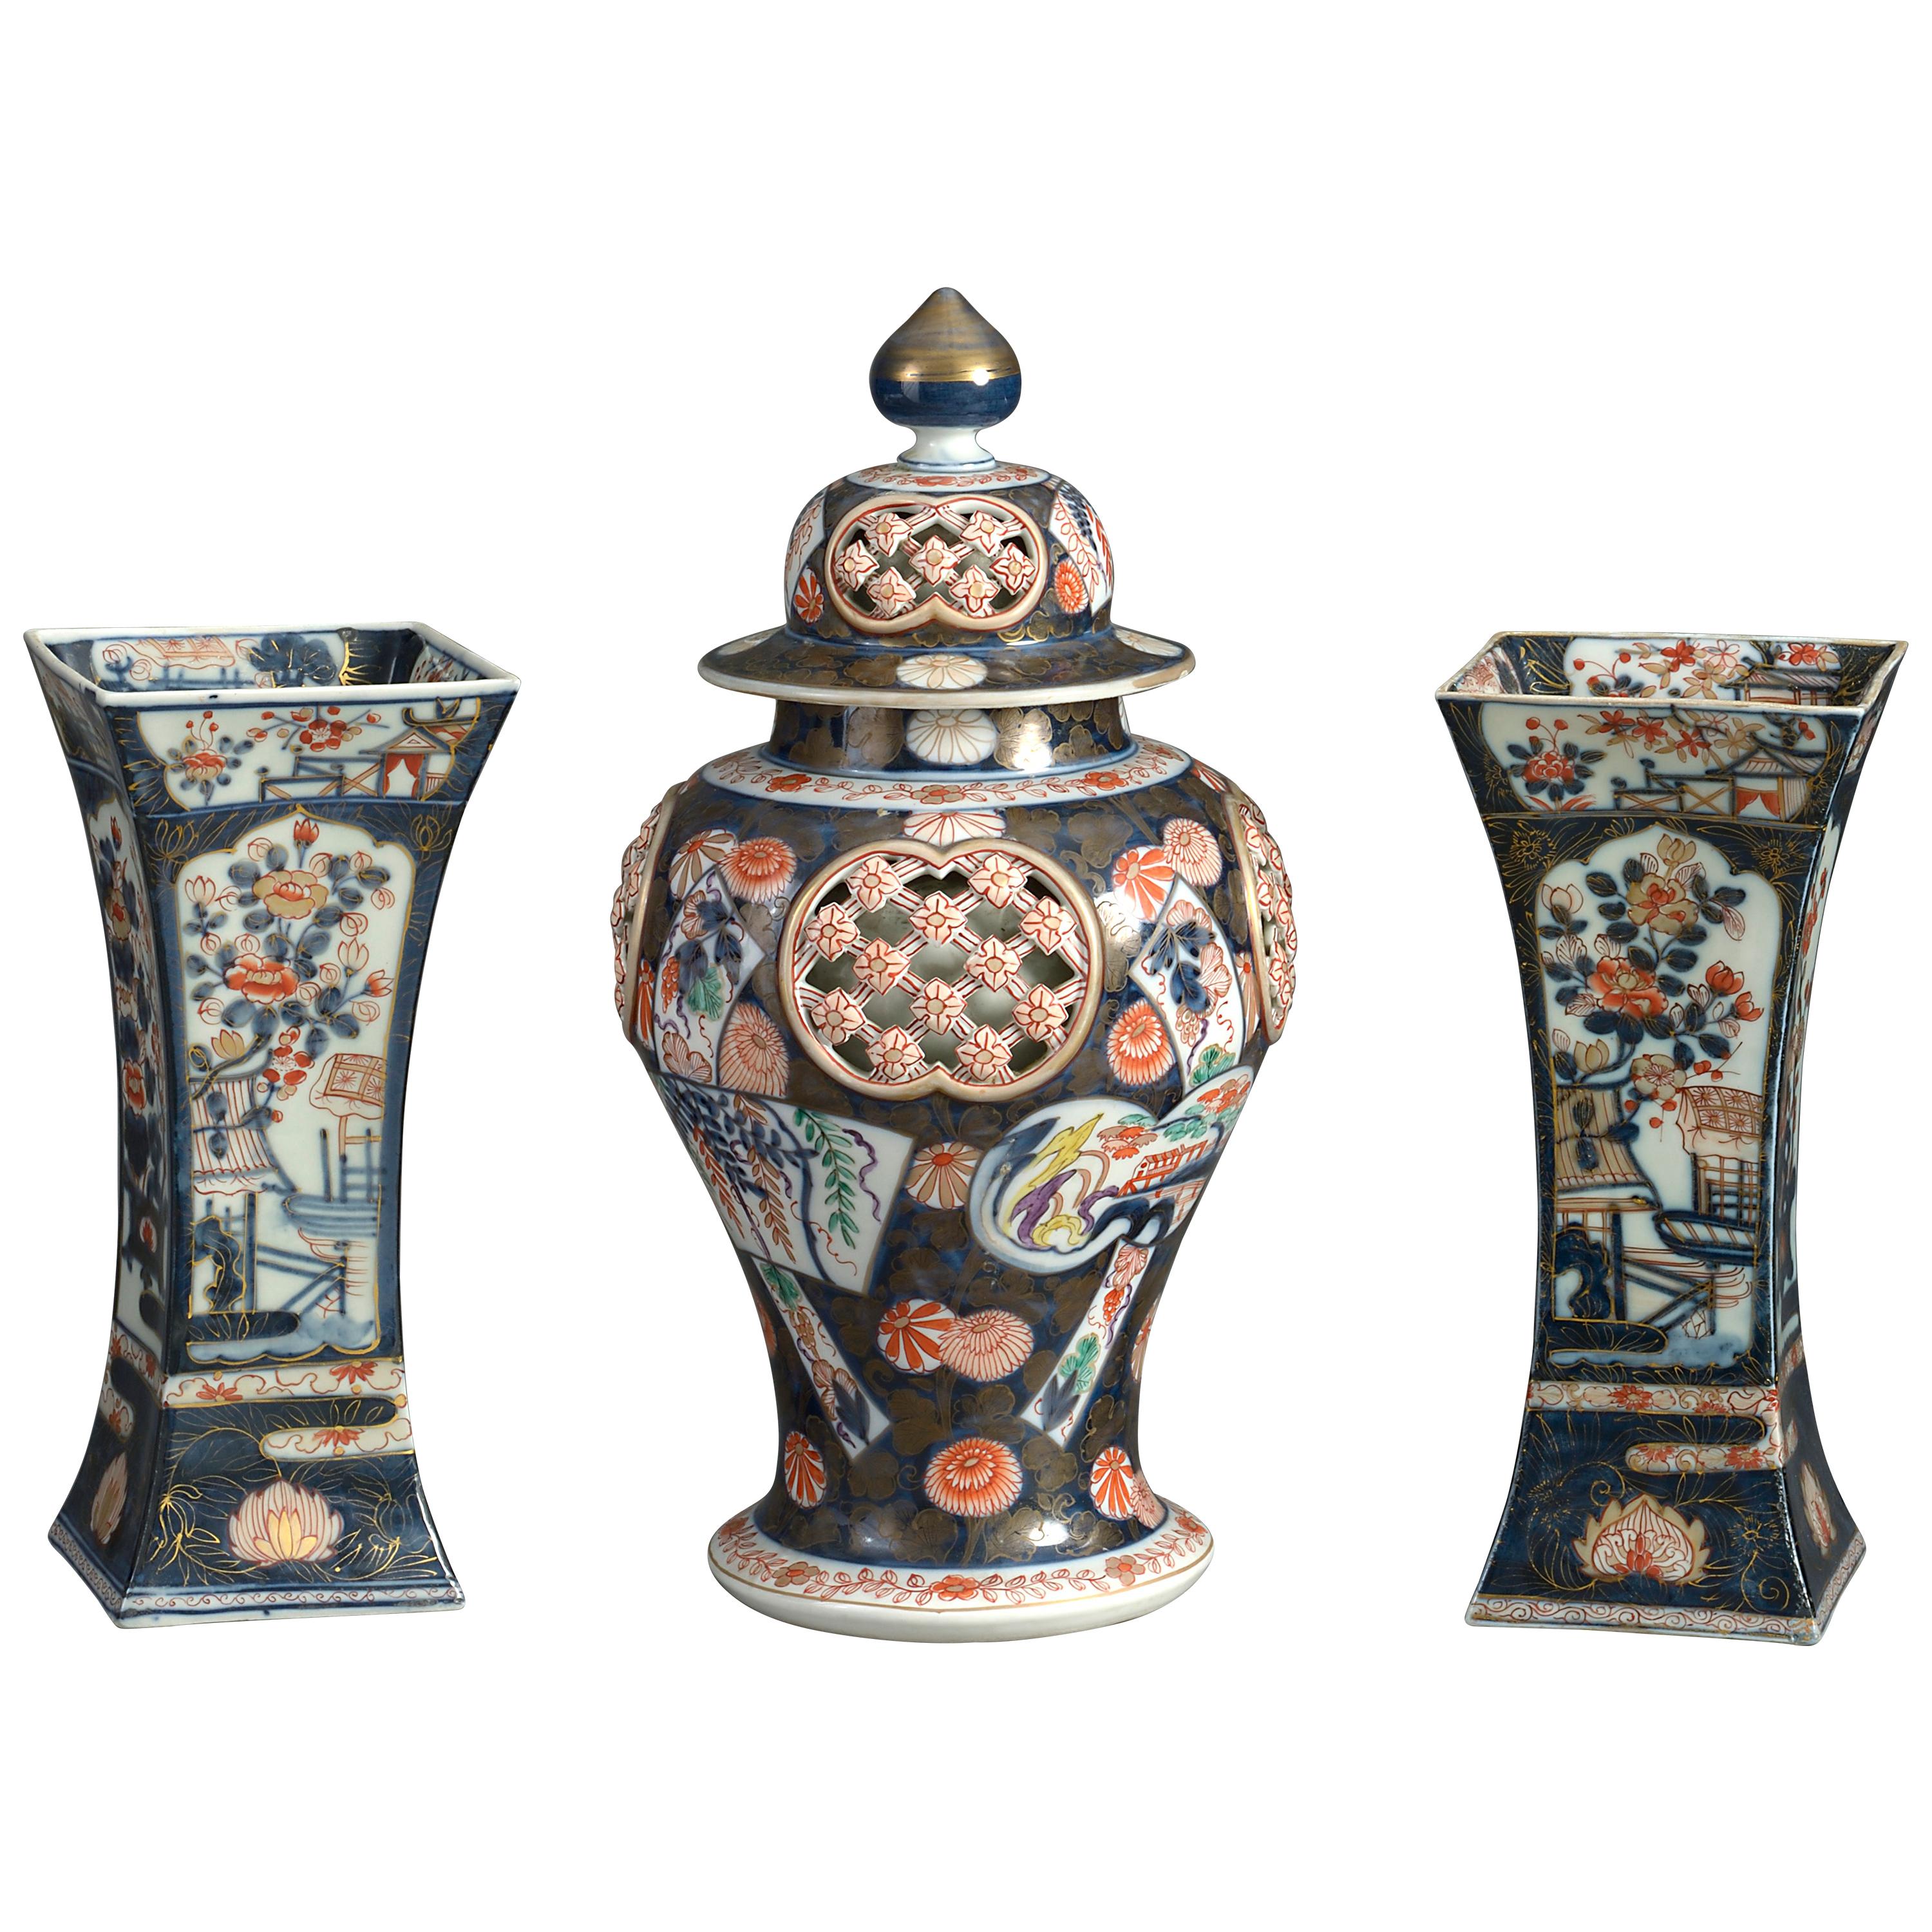 Drei Samson-Imari-Porzellanvasen aus dem 19. Jahrhundert